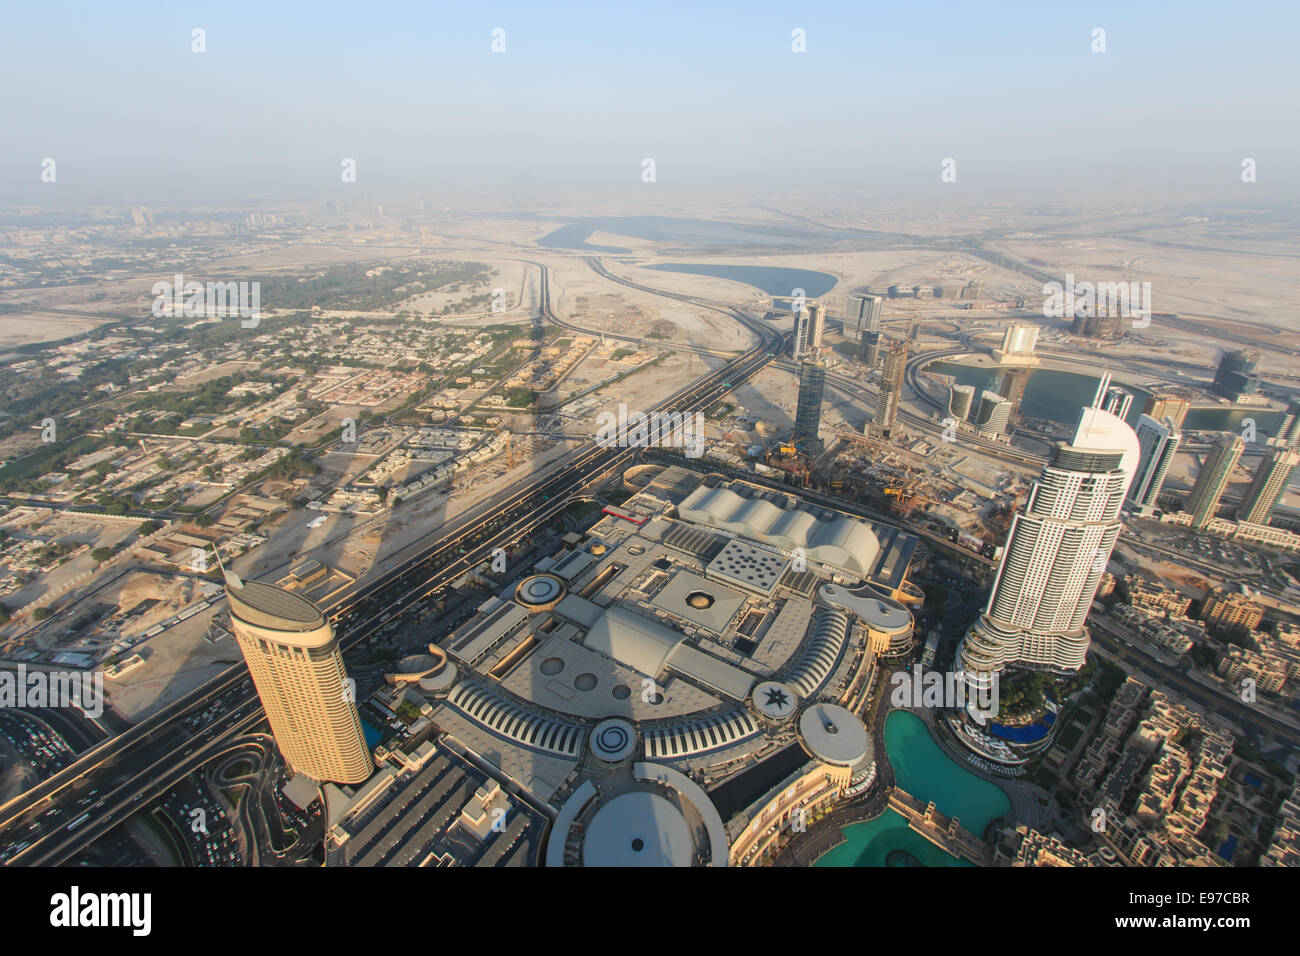 DUBAI, UAE - October 07, 2014: View of Dubai at sunset from the new worlds tallest building, the Burj Khalifa. Stock Photo